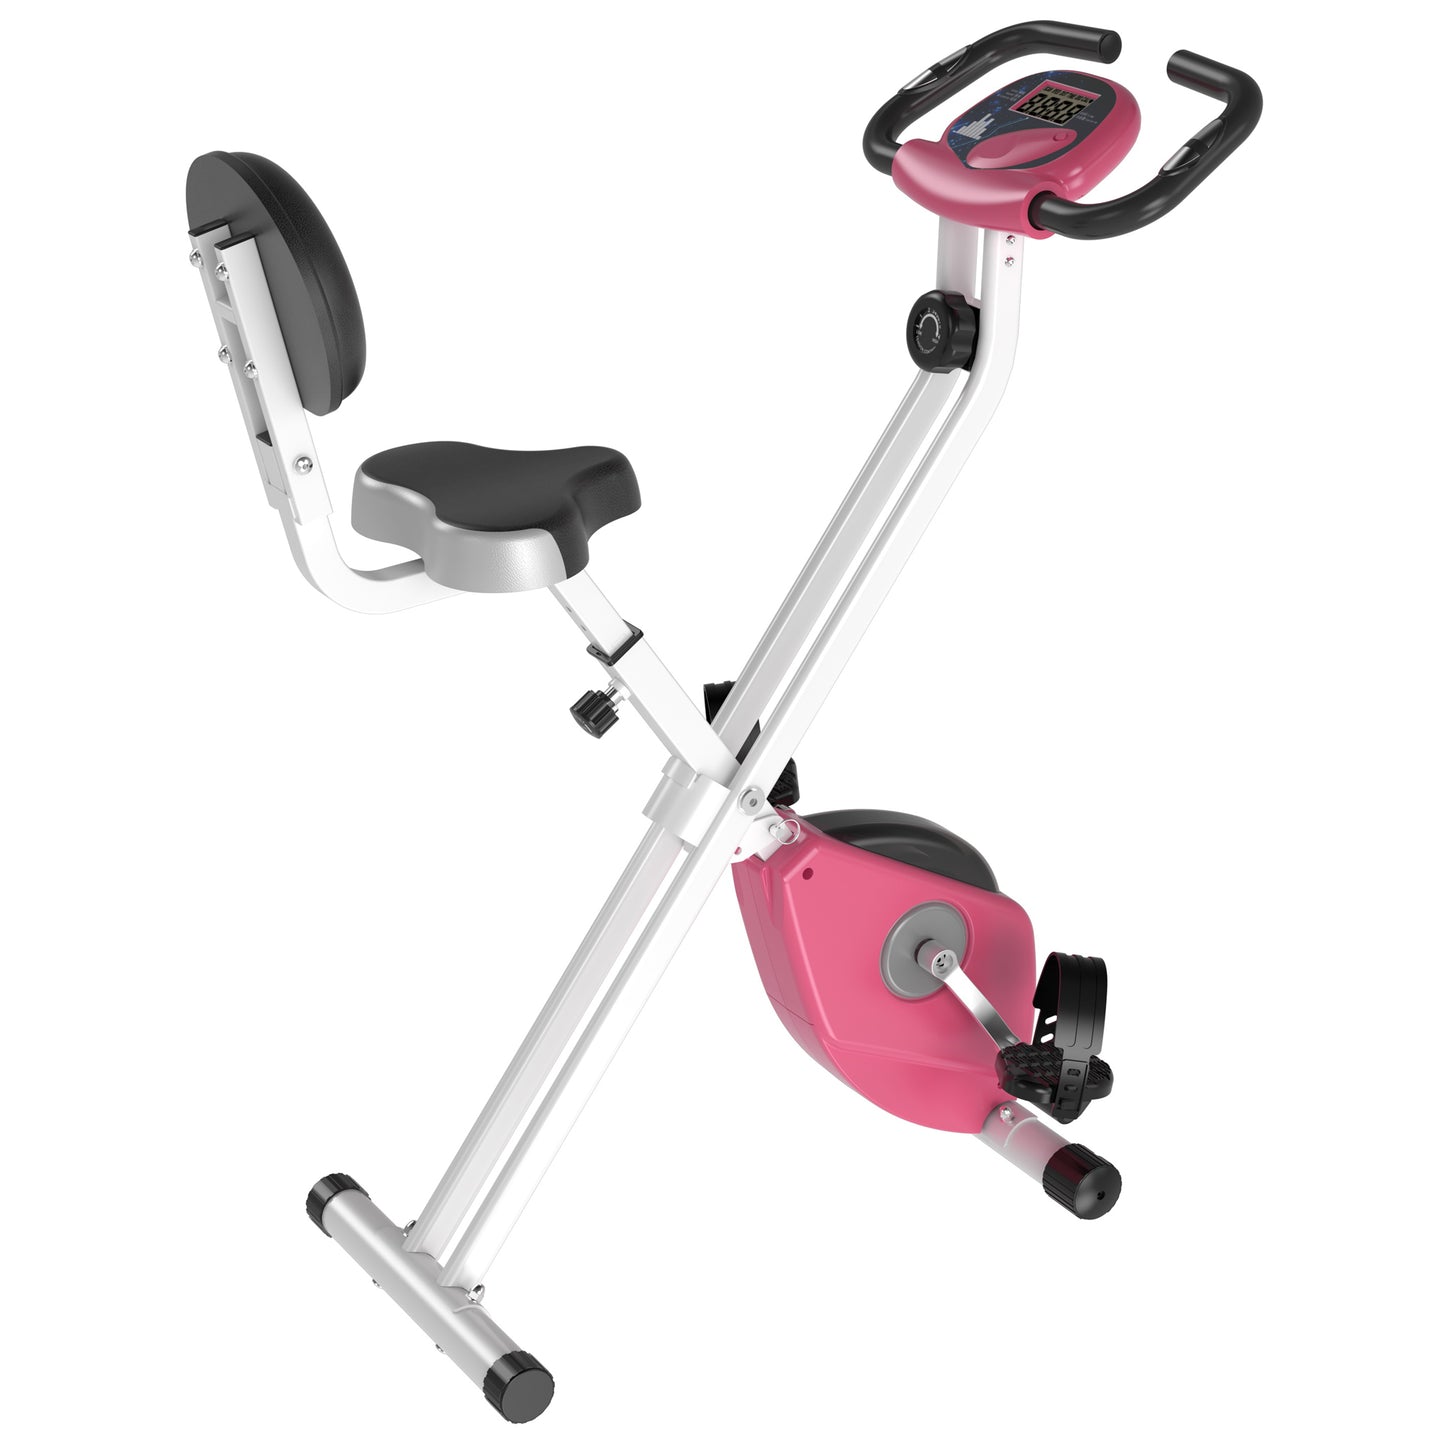 HOMCOM Manual Resistance Exercise Bike Foldable w/ LCD Monitor Adjustable Seat Pink